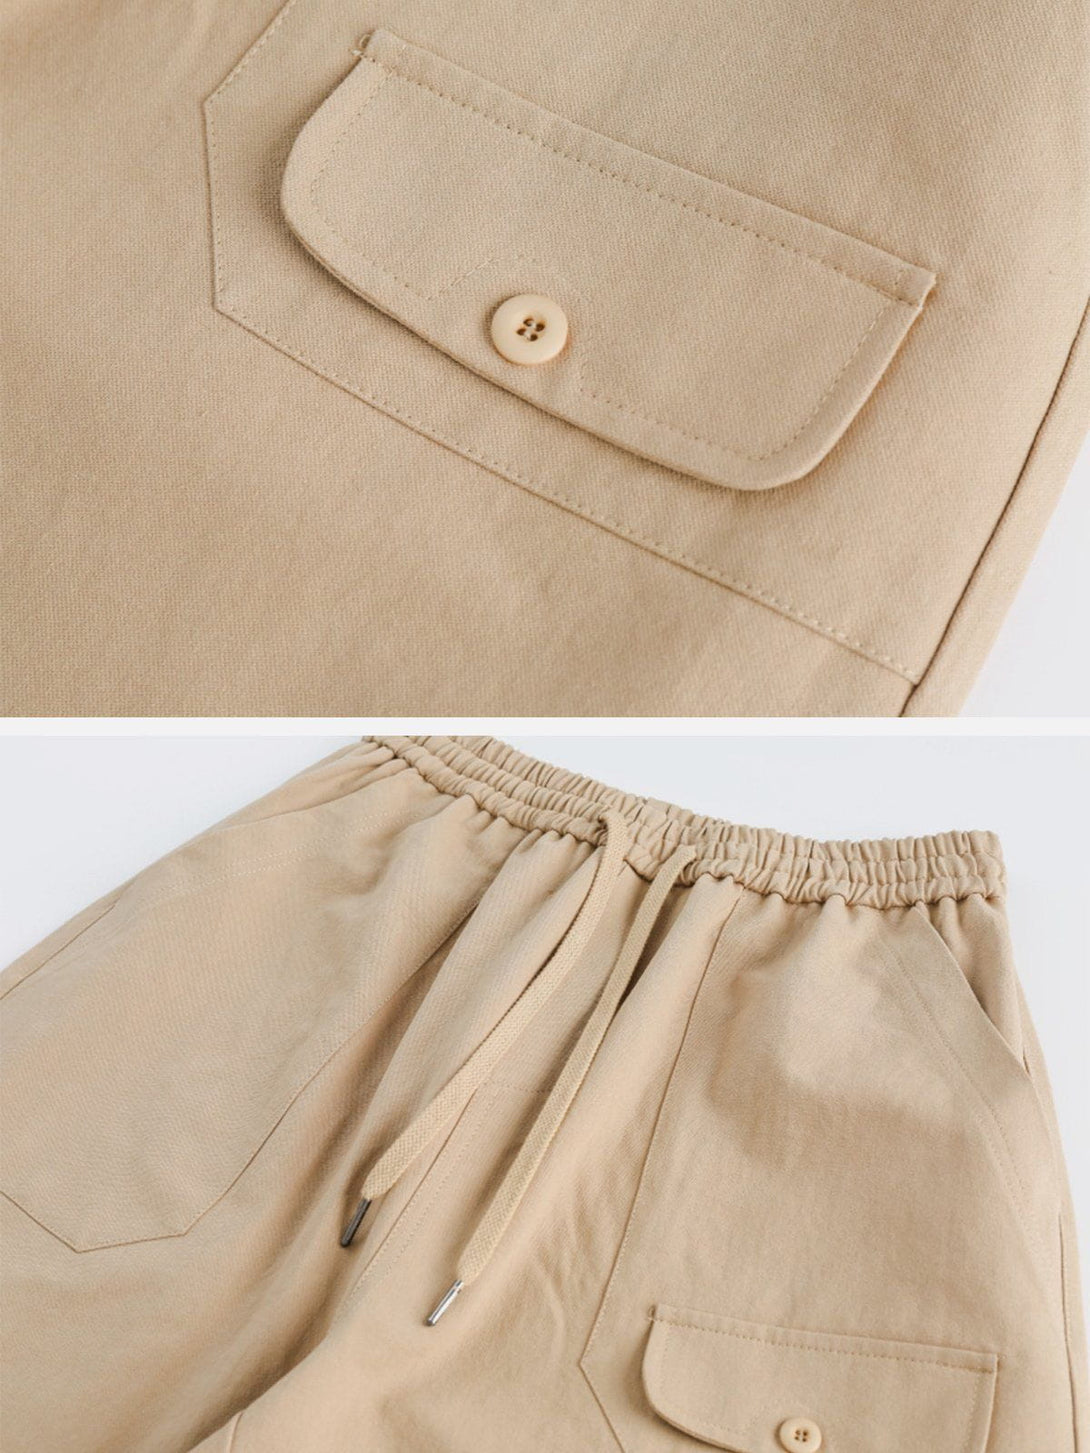 Levefly - Irregular Pocket Design Cargo Pants - Streetwear Fashion - levefly.com